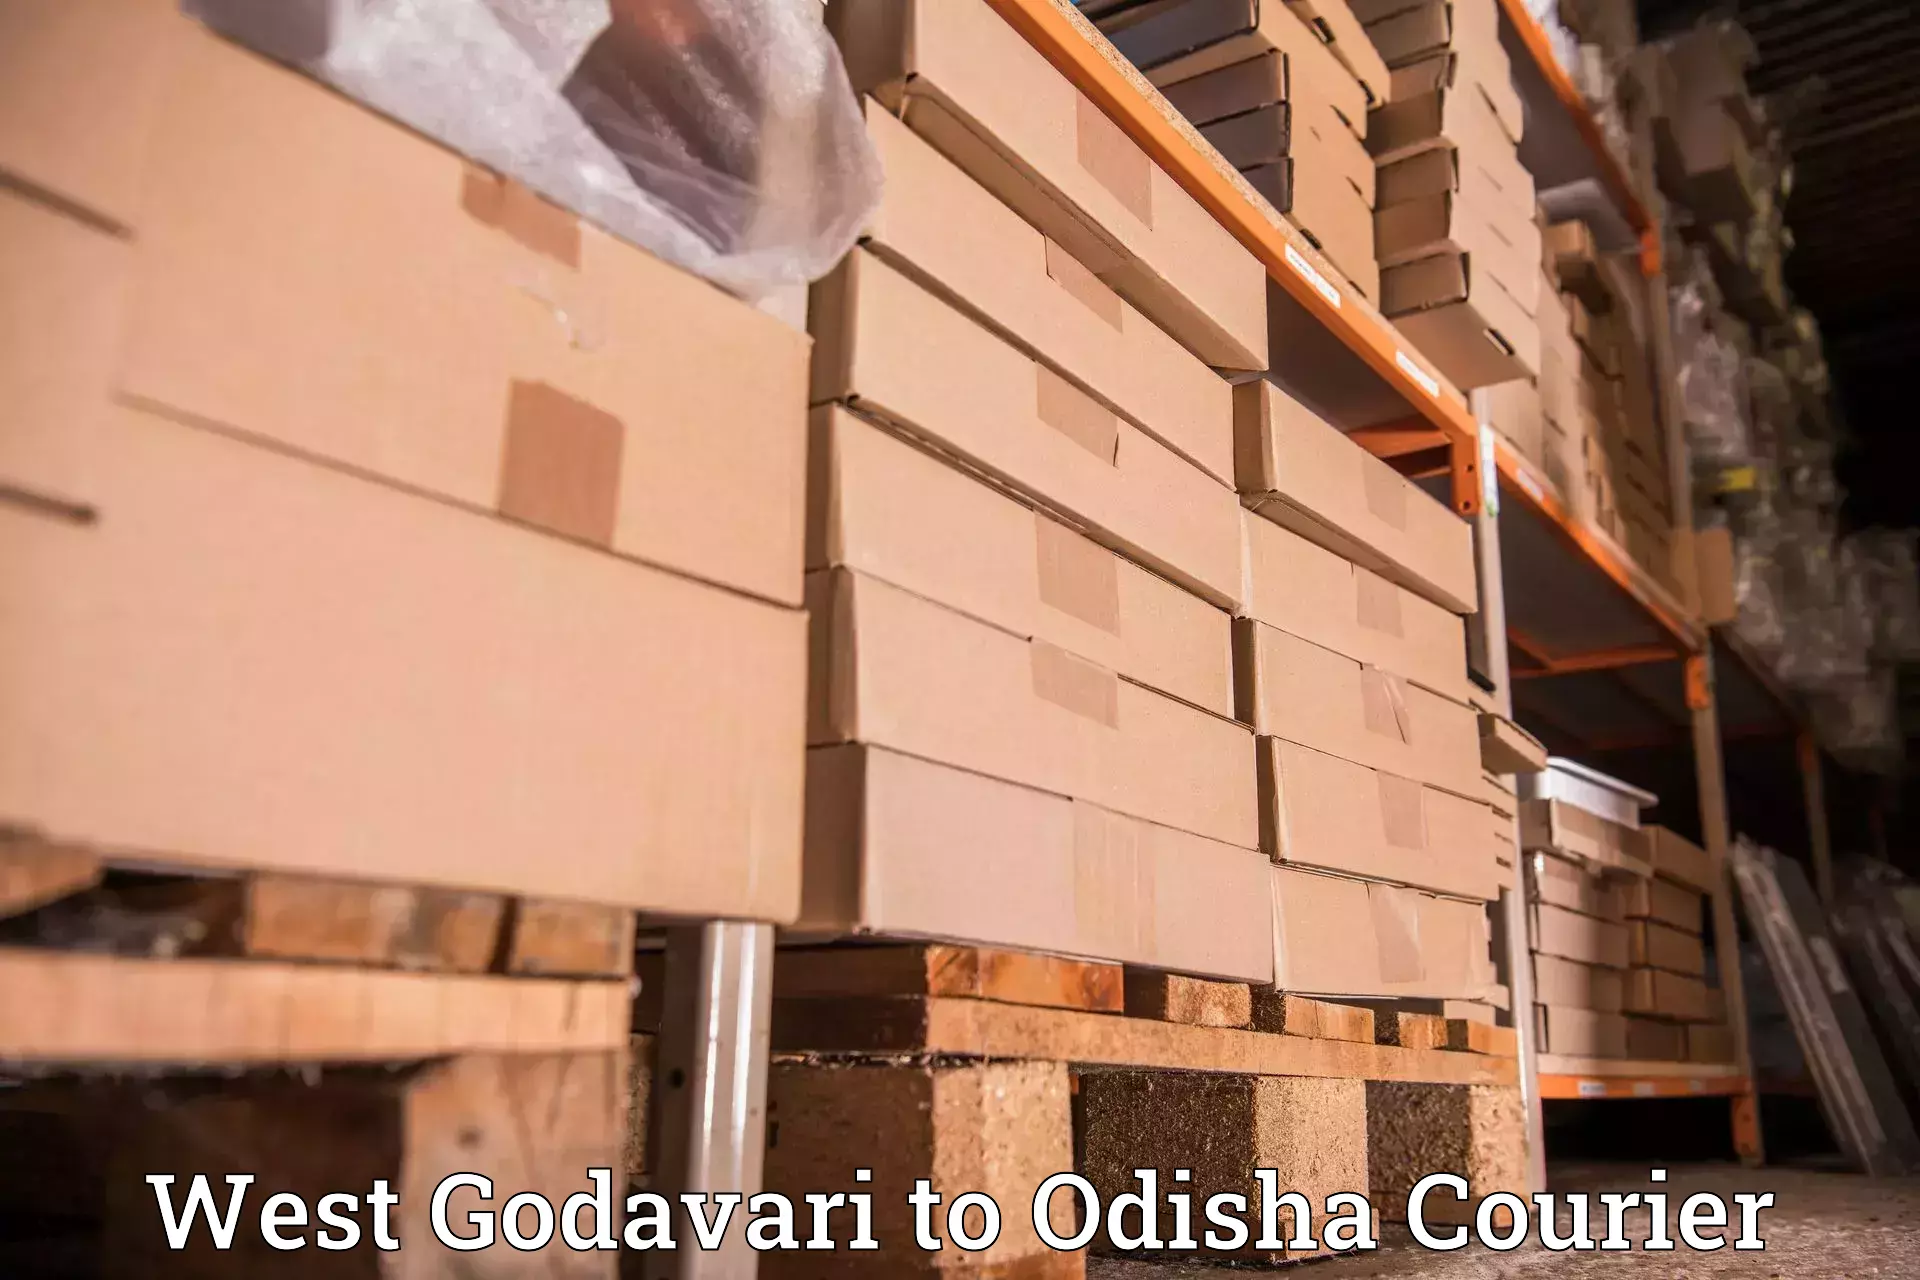 Speedy delivery service West Godavari to Puri